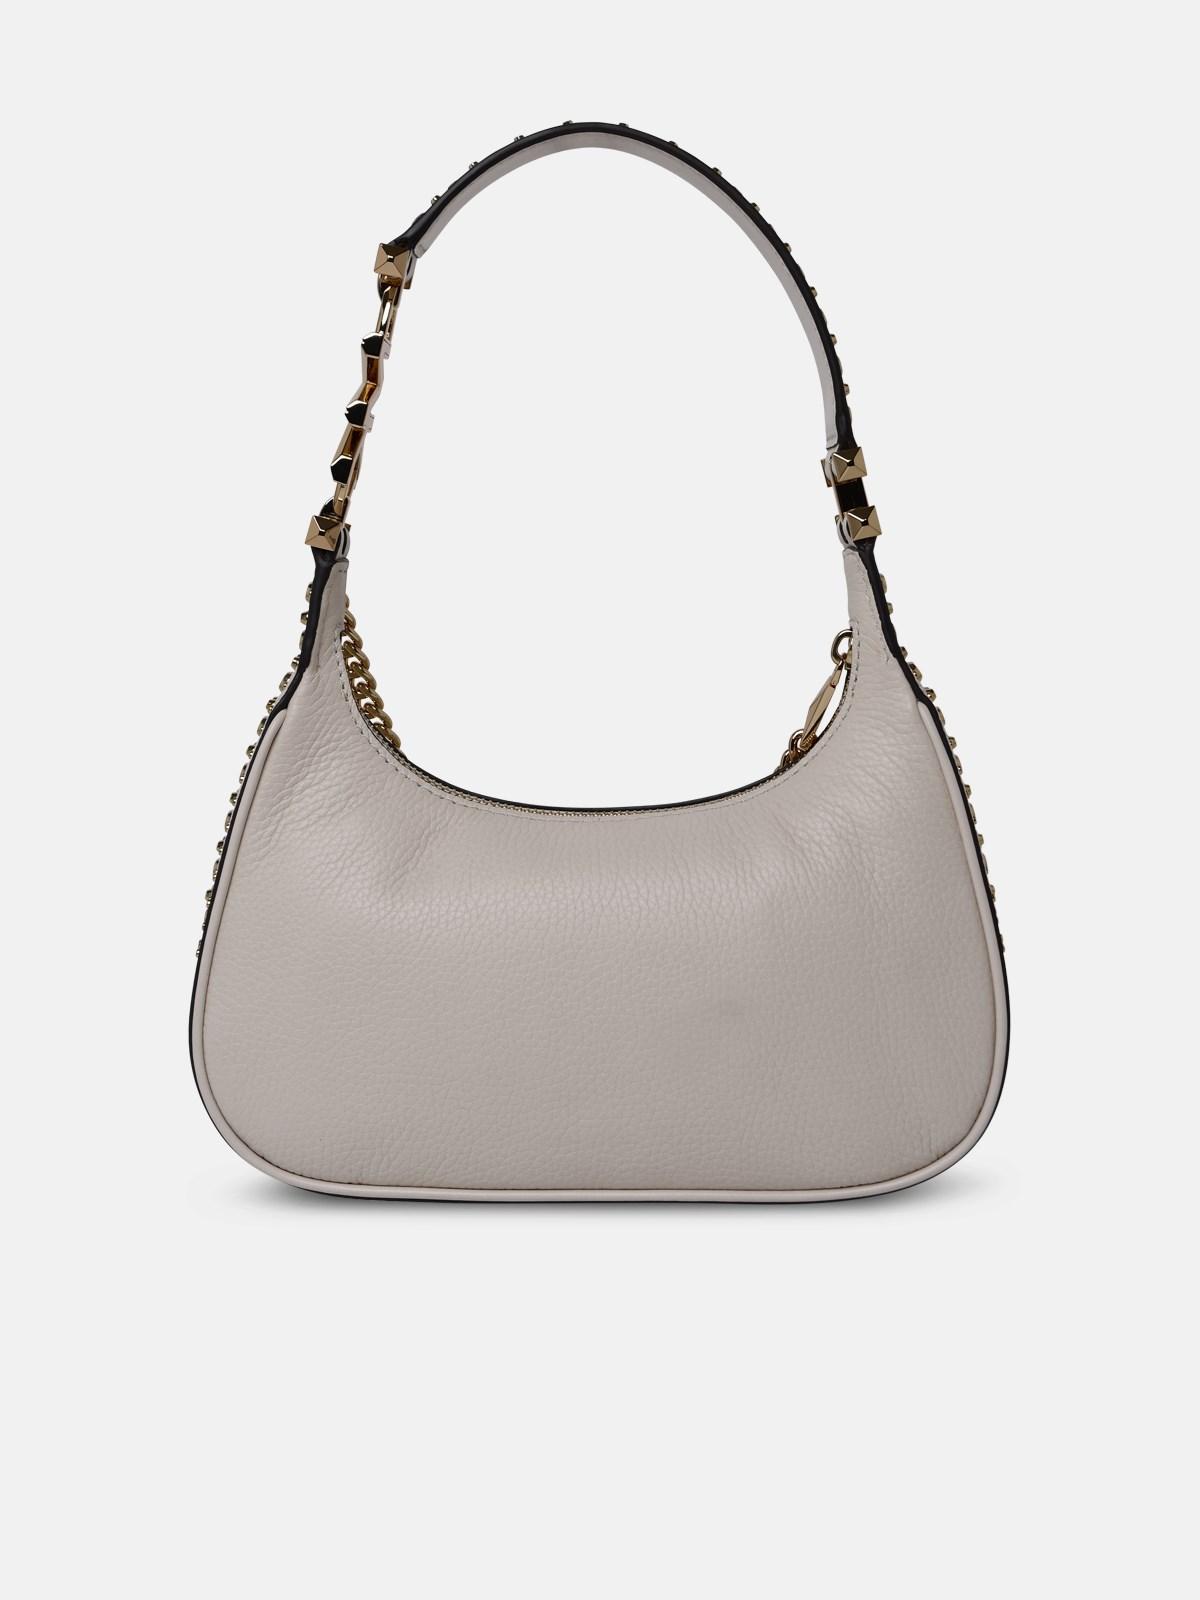 Michael Kors Piper Small Pouchette Black/Silver One Size: Handbags